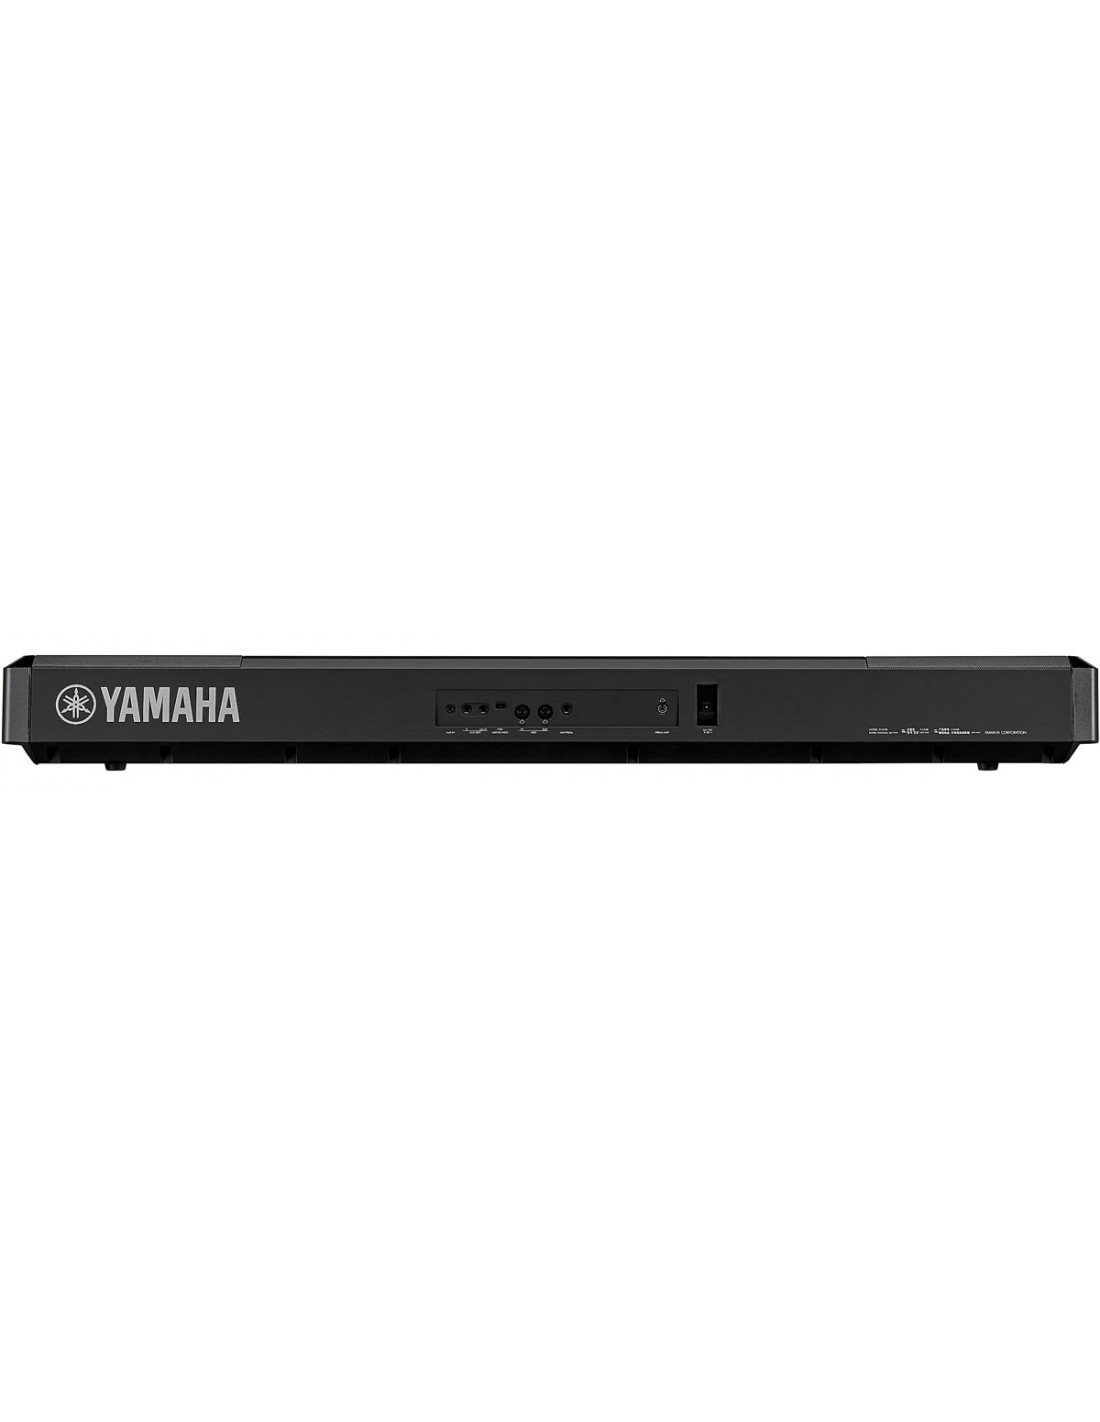 Yamaha P-525b - Portable digital piano - Variation 2